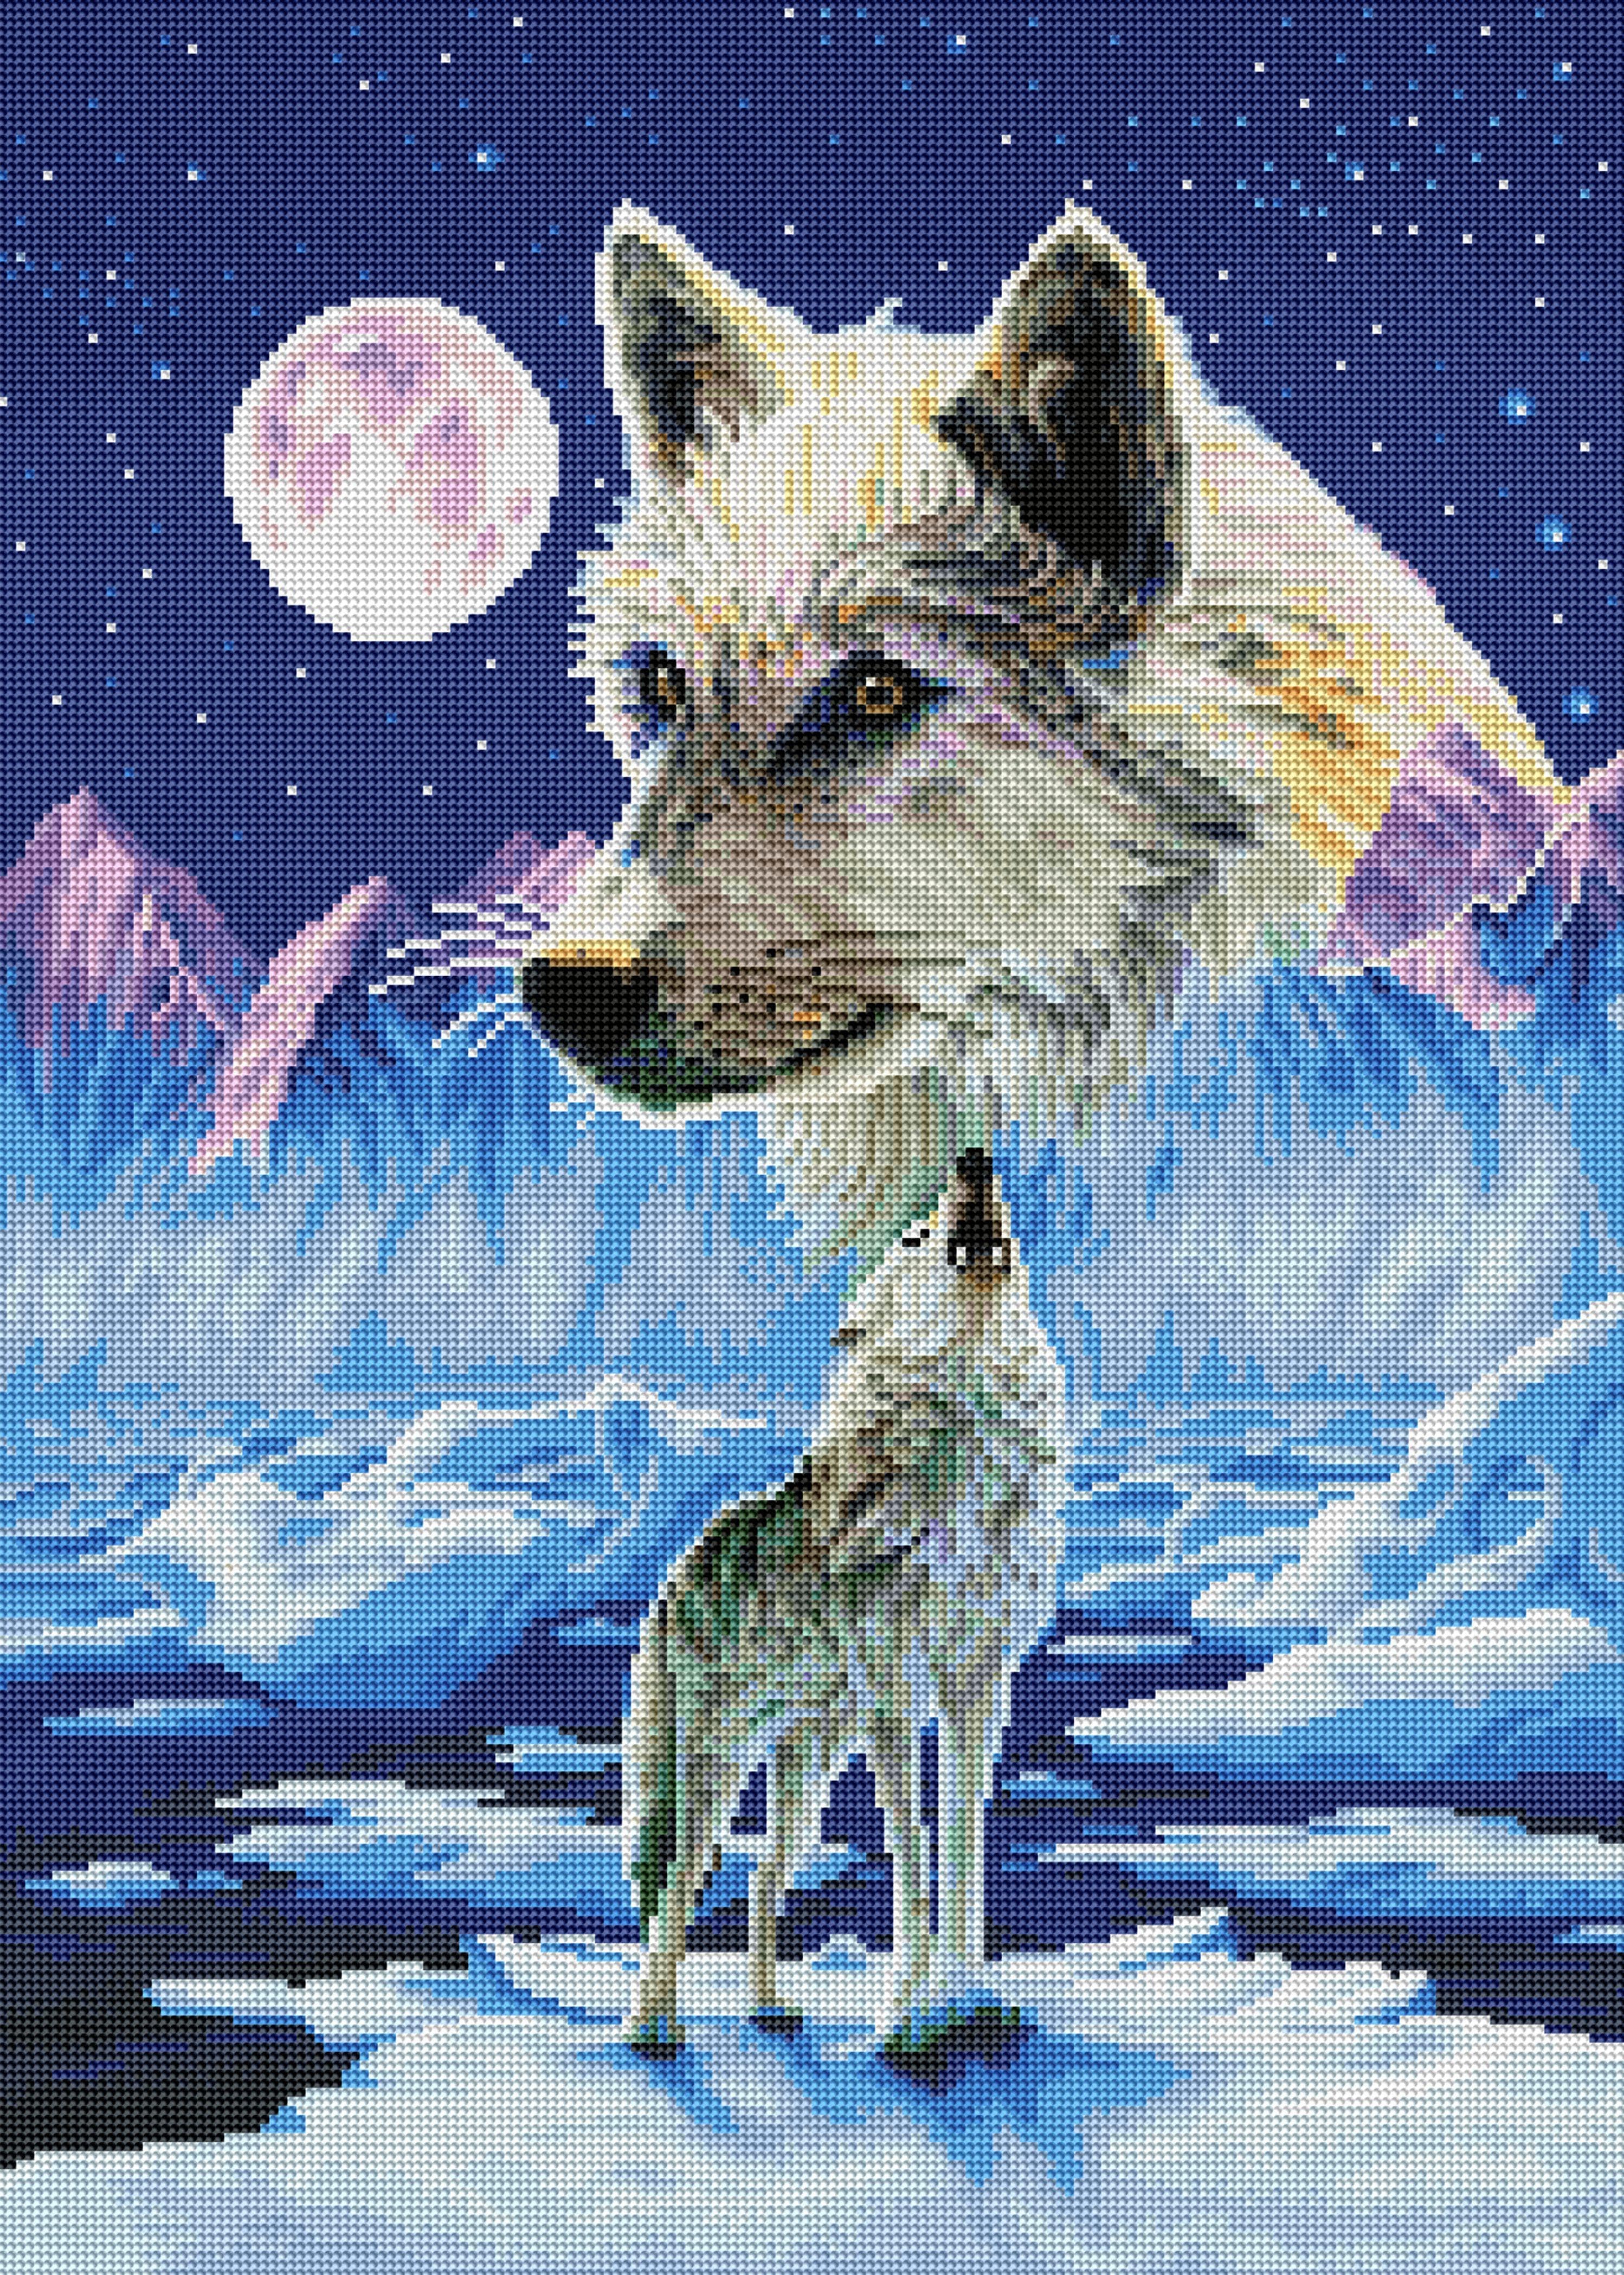 Abstract Wolf Diamond Painting Kits 20% Off Today – DIY Diamond Paintings